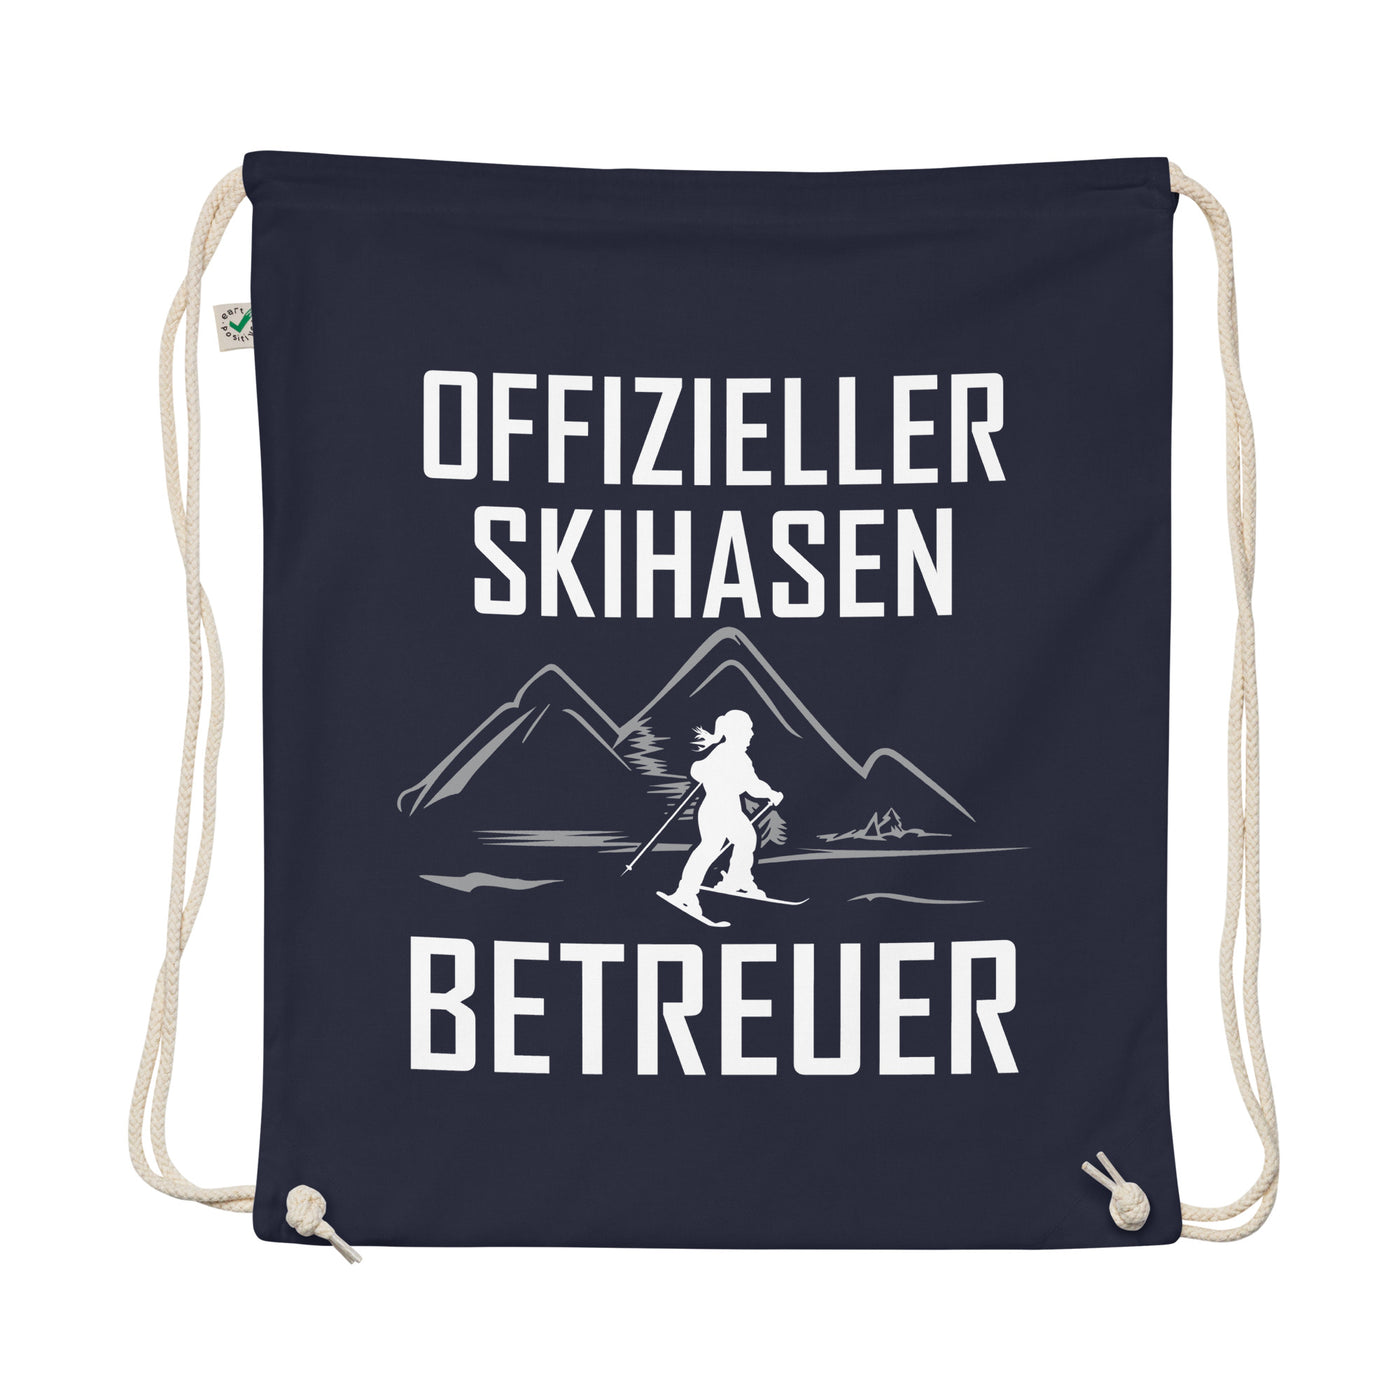 Skihasen Betreuer - Organic Turnbeutel ski